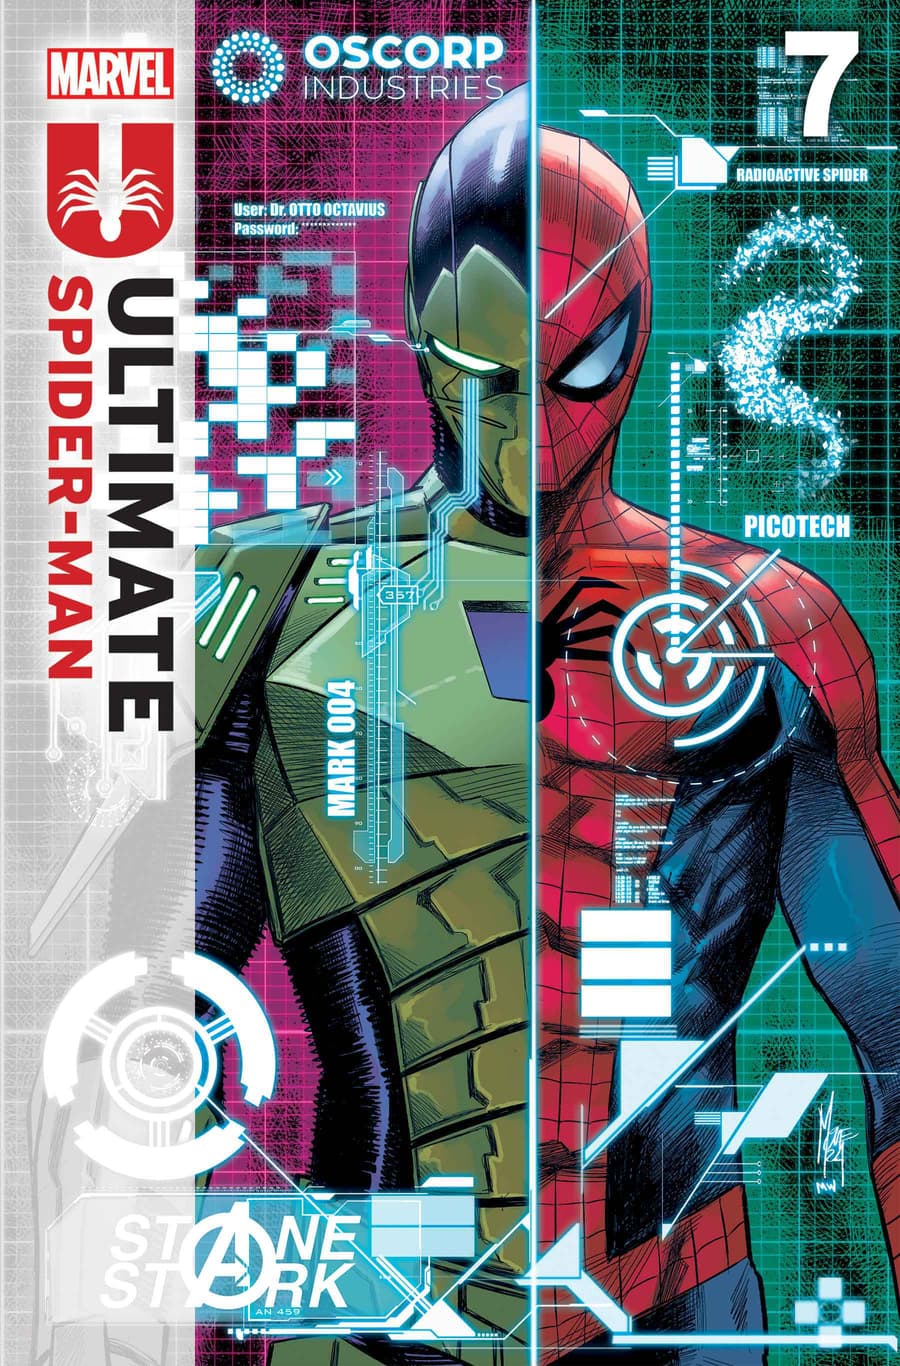 ULTIMATE SPIDER-MAN #7 cover by Marco Checchetto